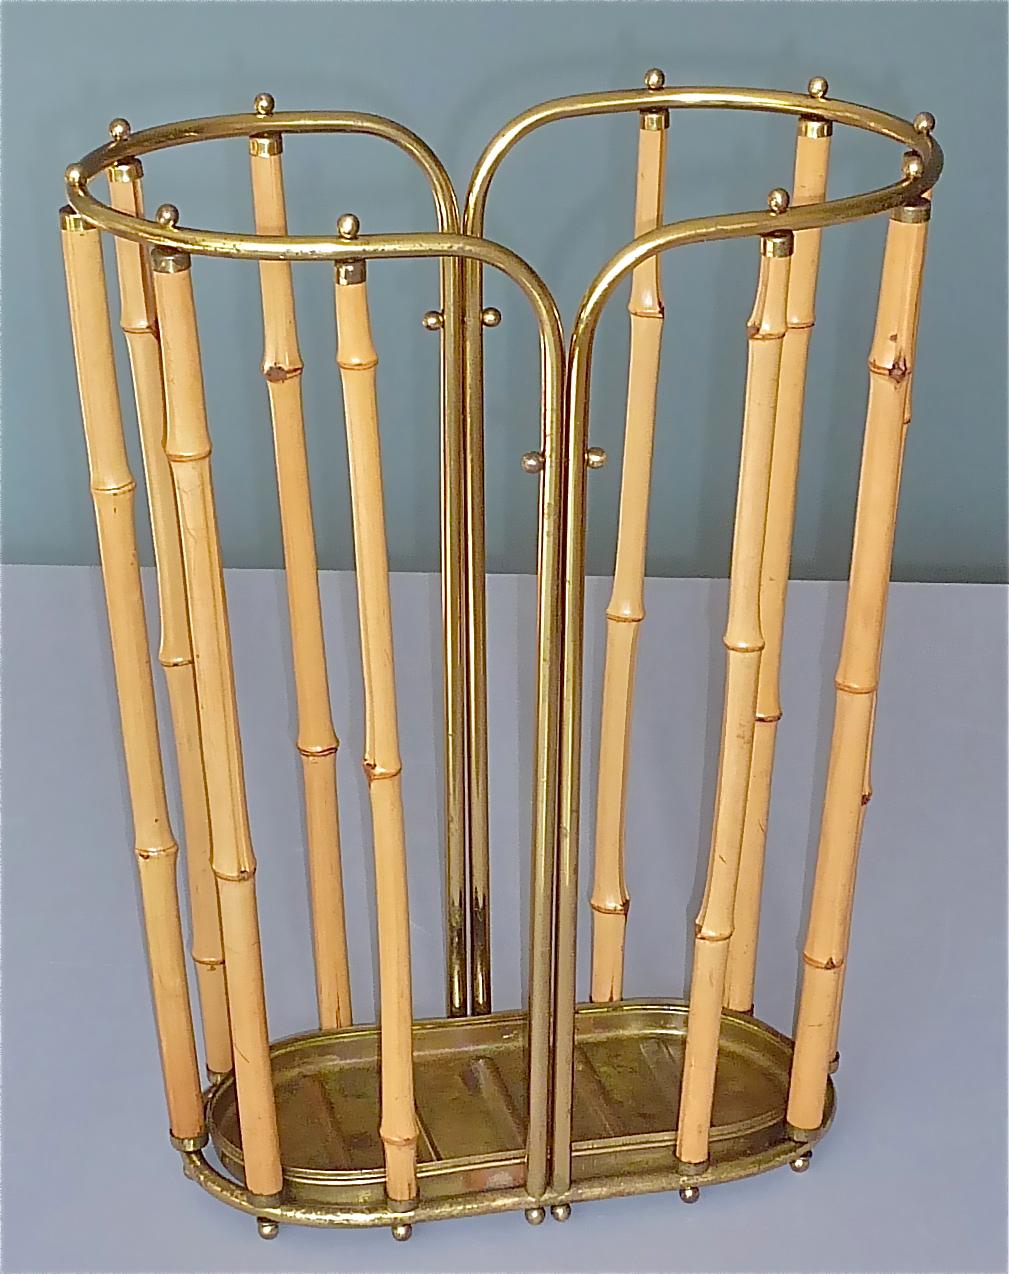 1950s Austrian Modernist Umbrella Stand Brass Bamboo, Josef Frank, Auböck Style For Sale 2